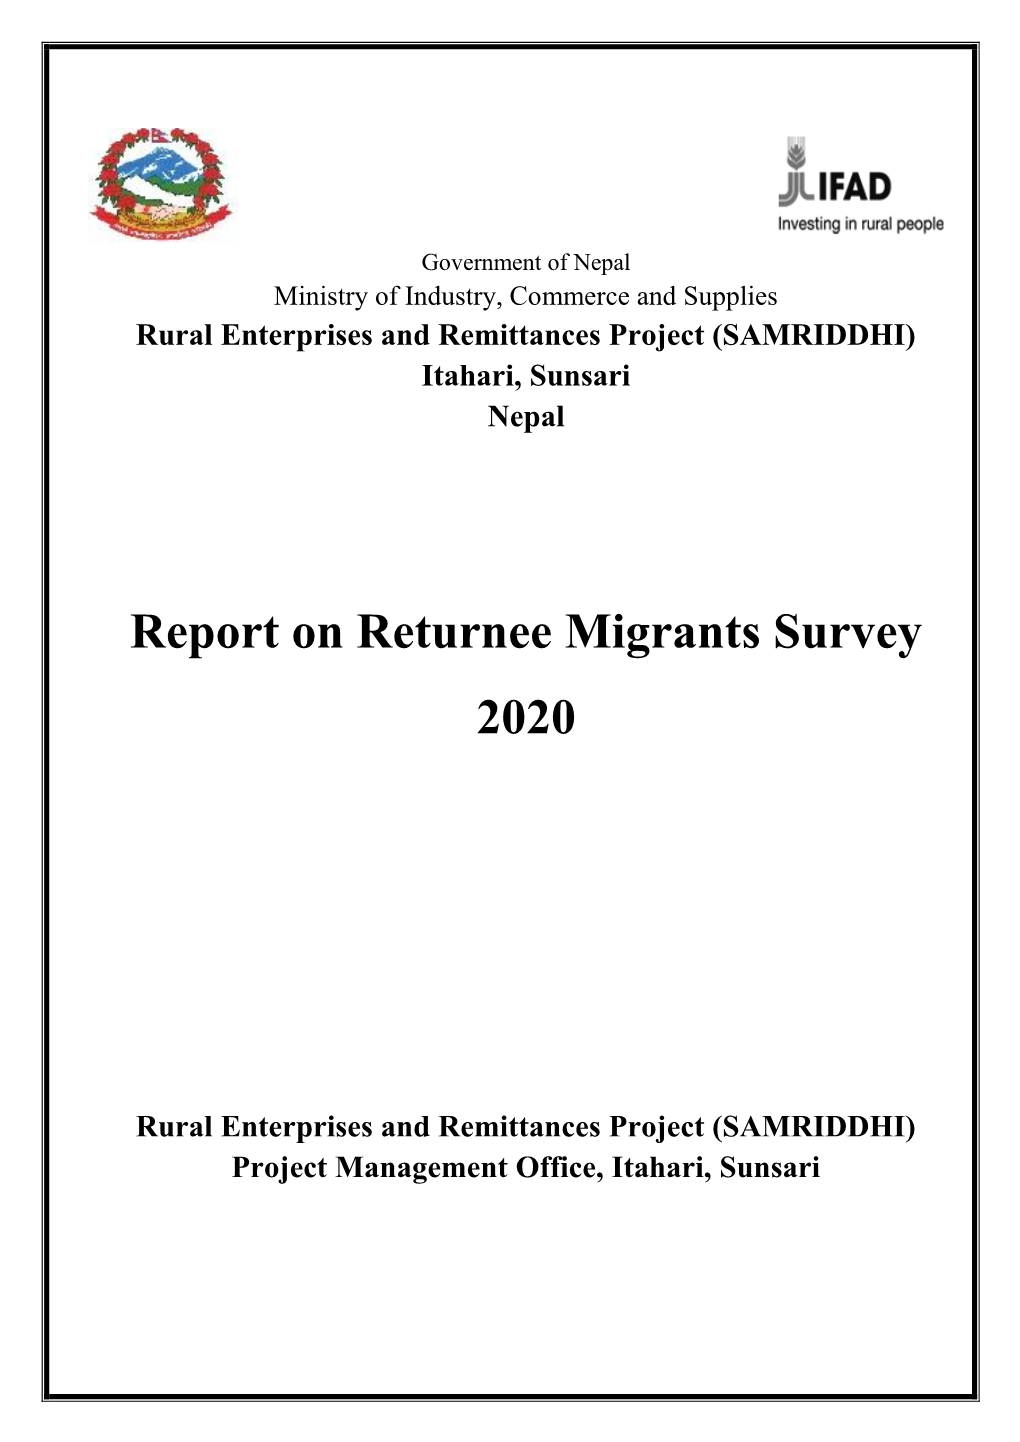 Returnee Study Report